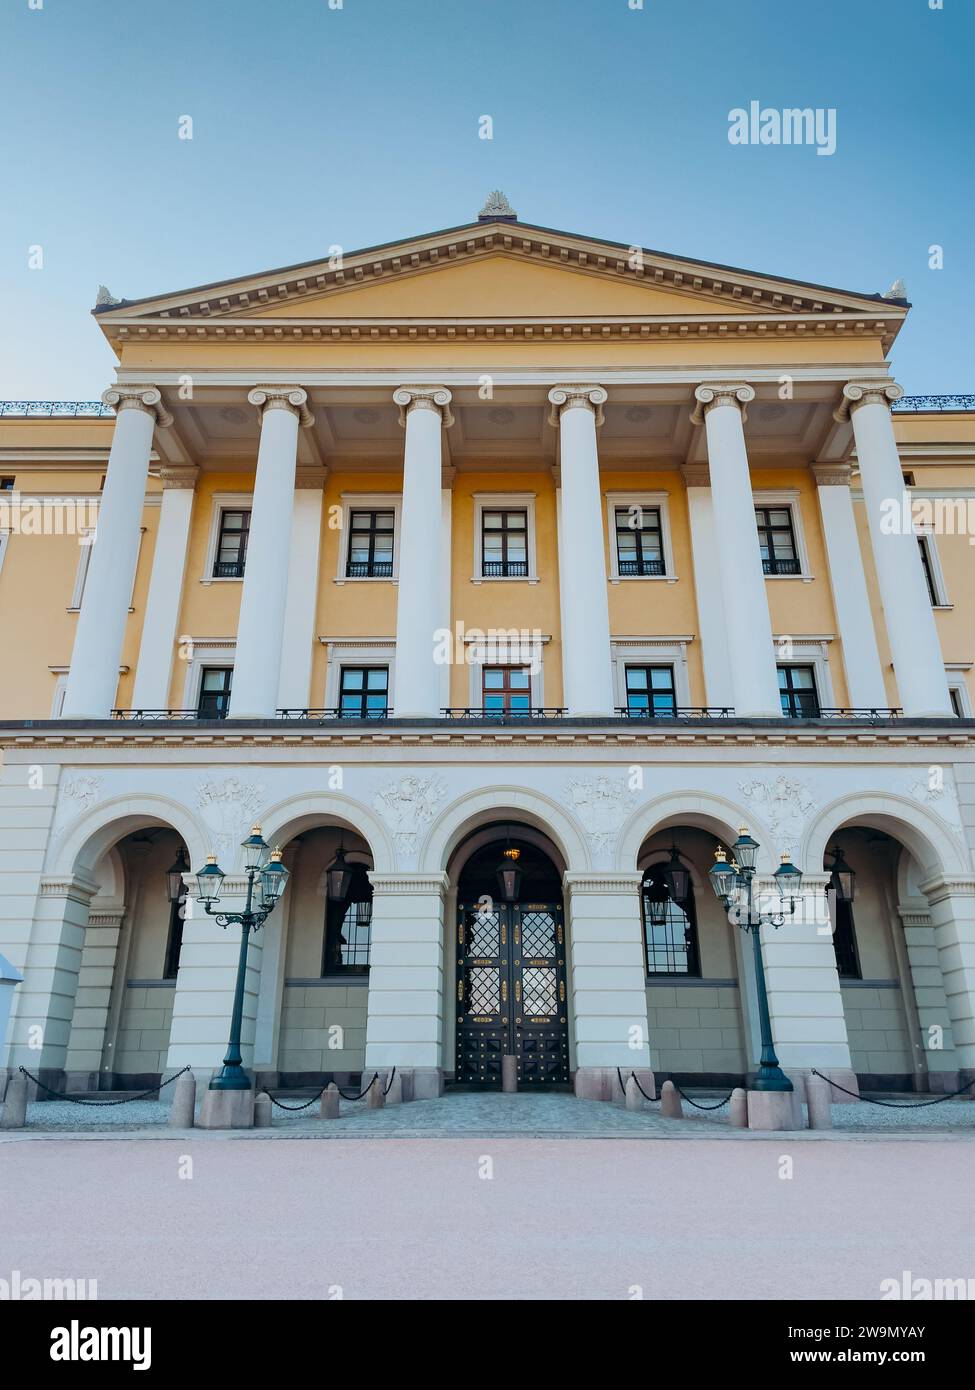 Facade of the Royal Palace, Oslo, Norway Stock Photo